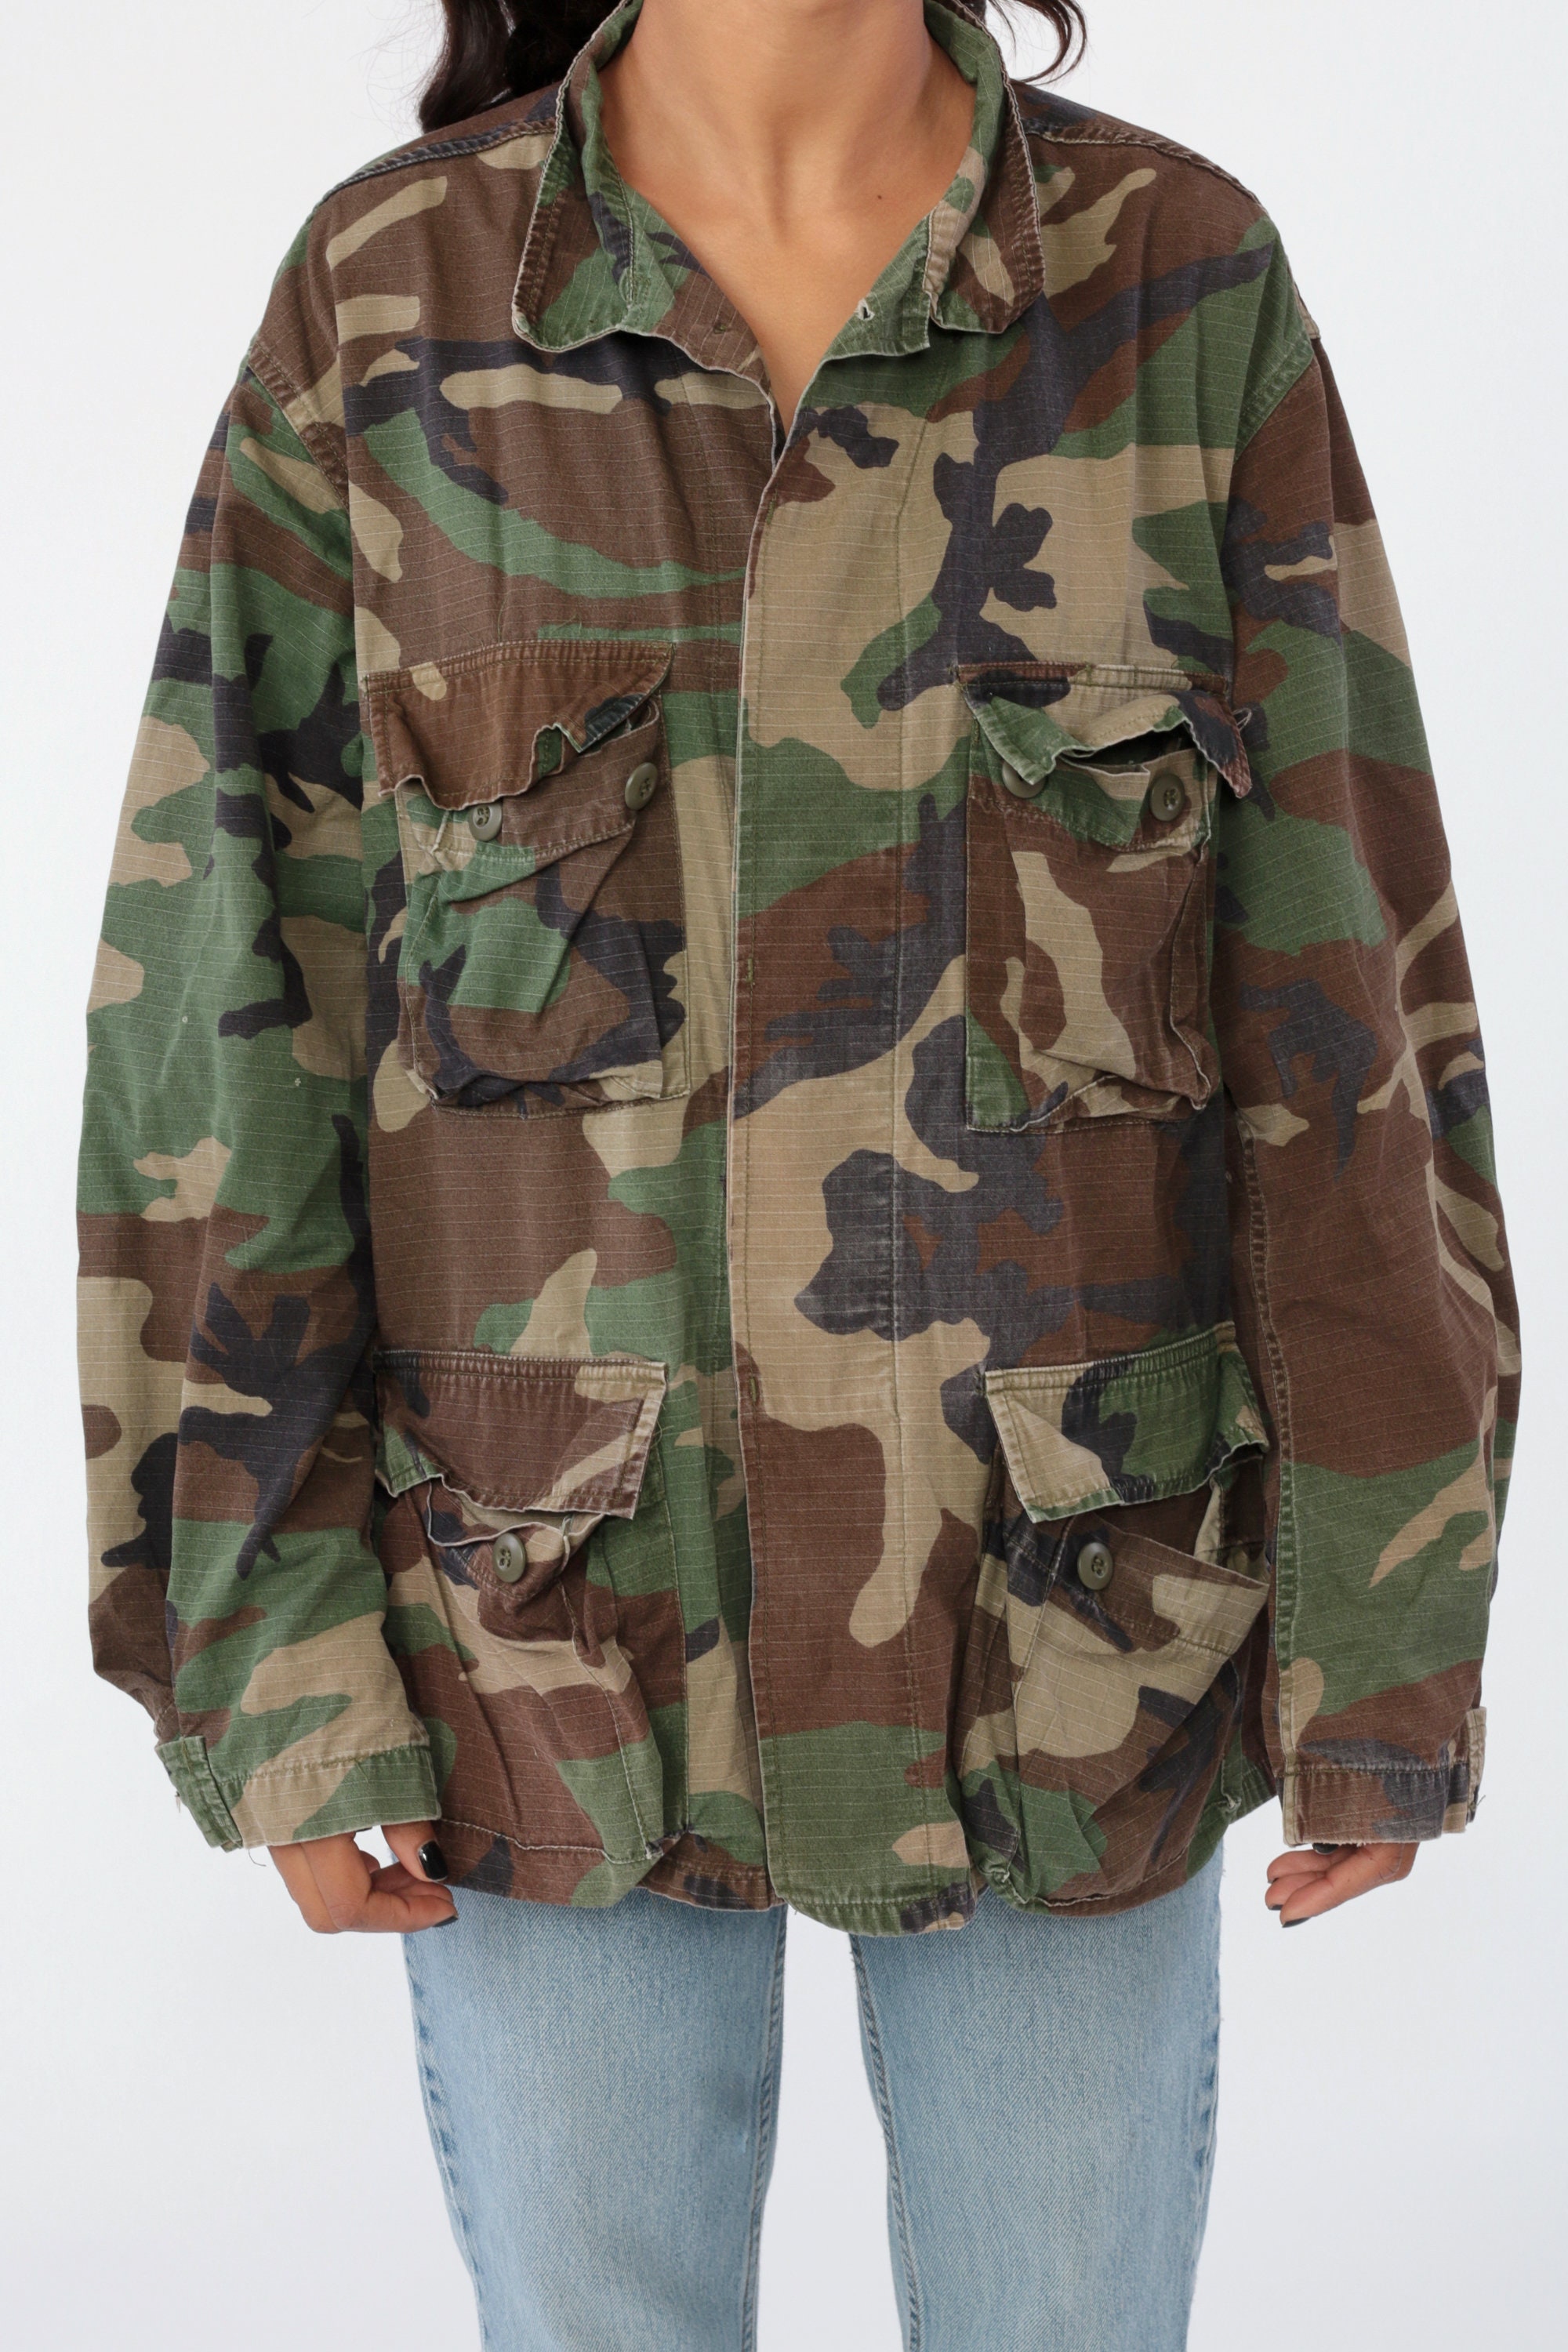 US Army Shirt Camo Jacket Camouflage Military Utility Patch Commando ...